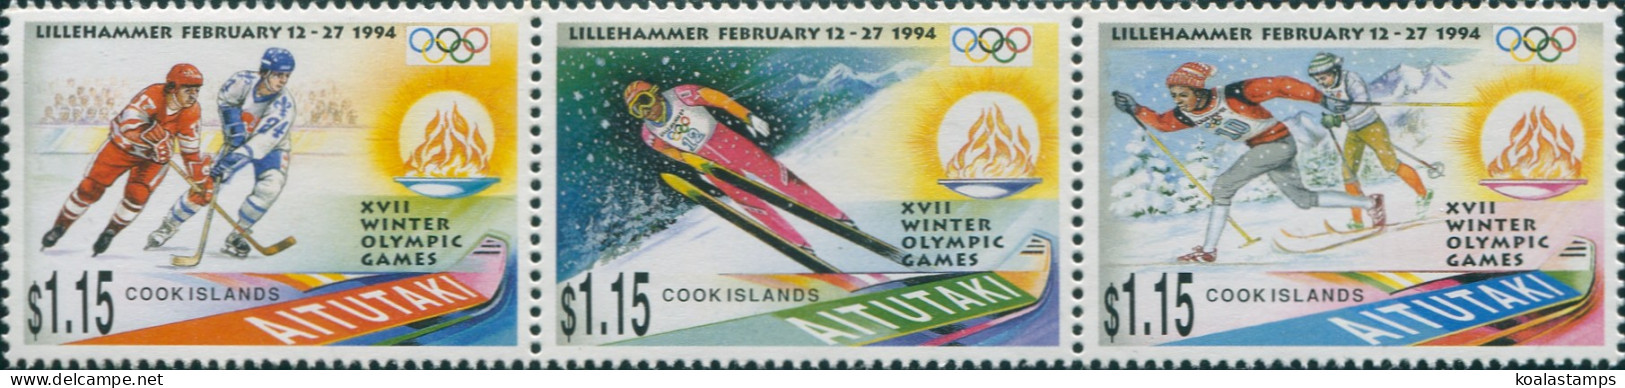 Aitutaki 1994 SG658-660 Winter Olympics Set MNH - Cook Islands